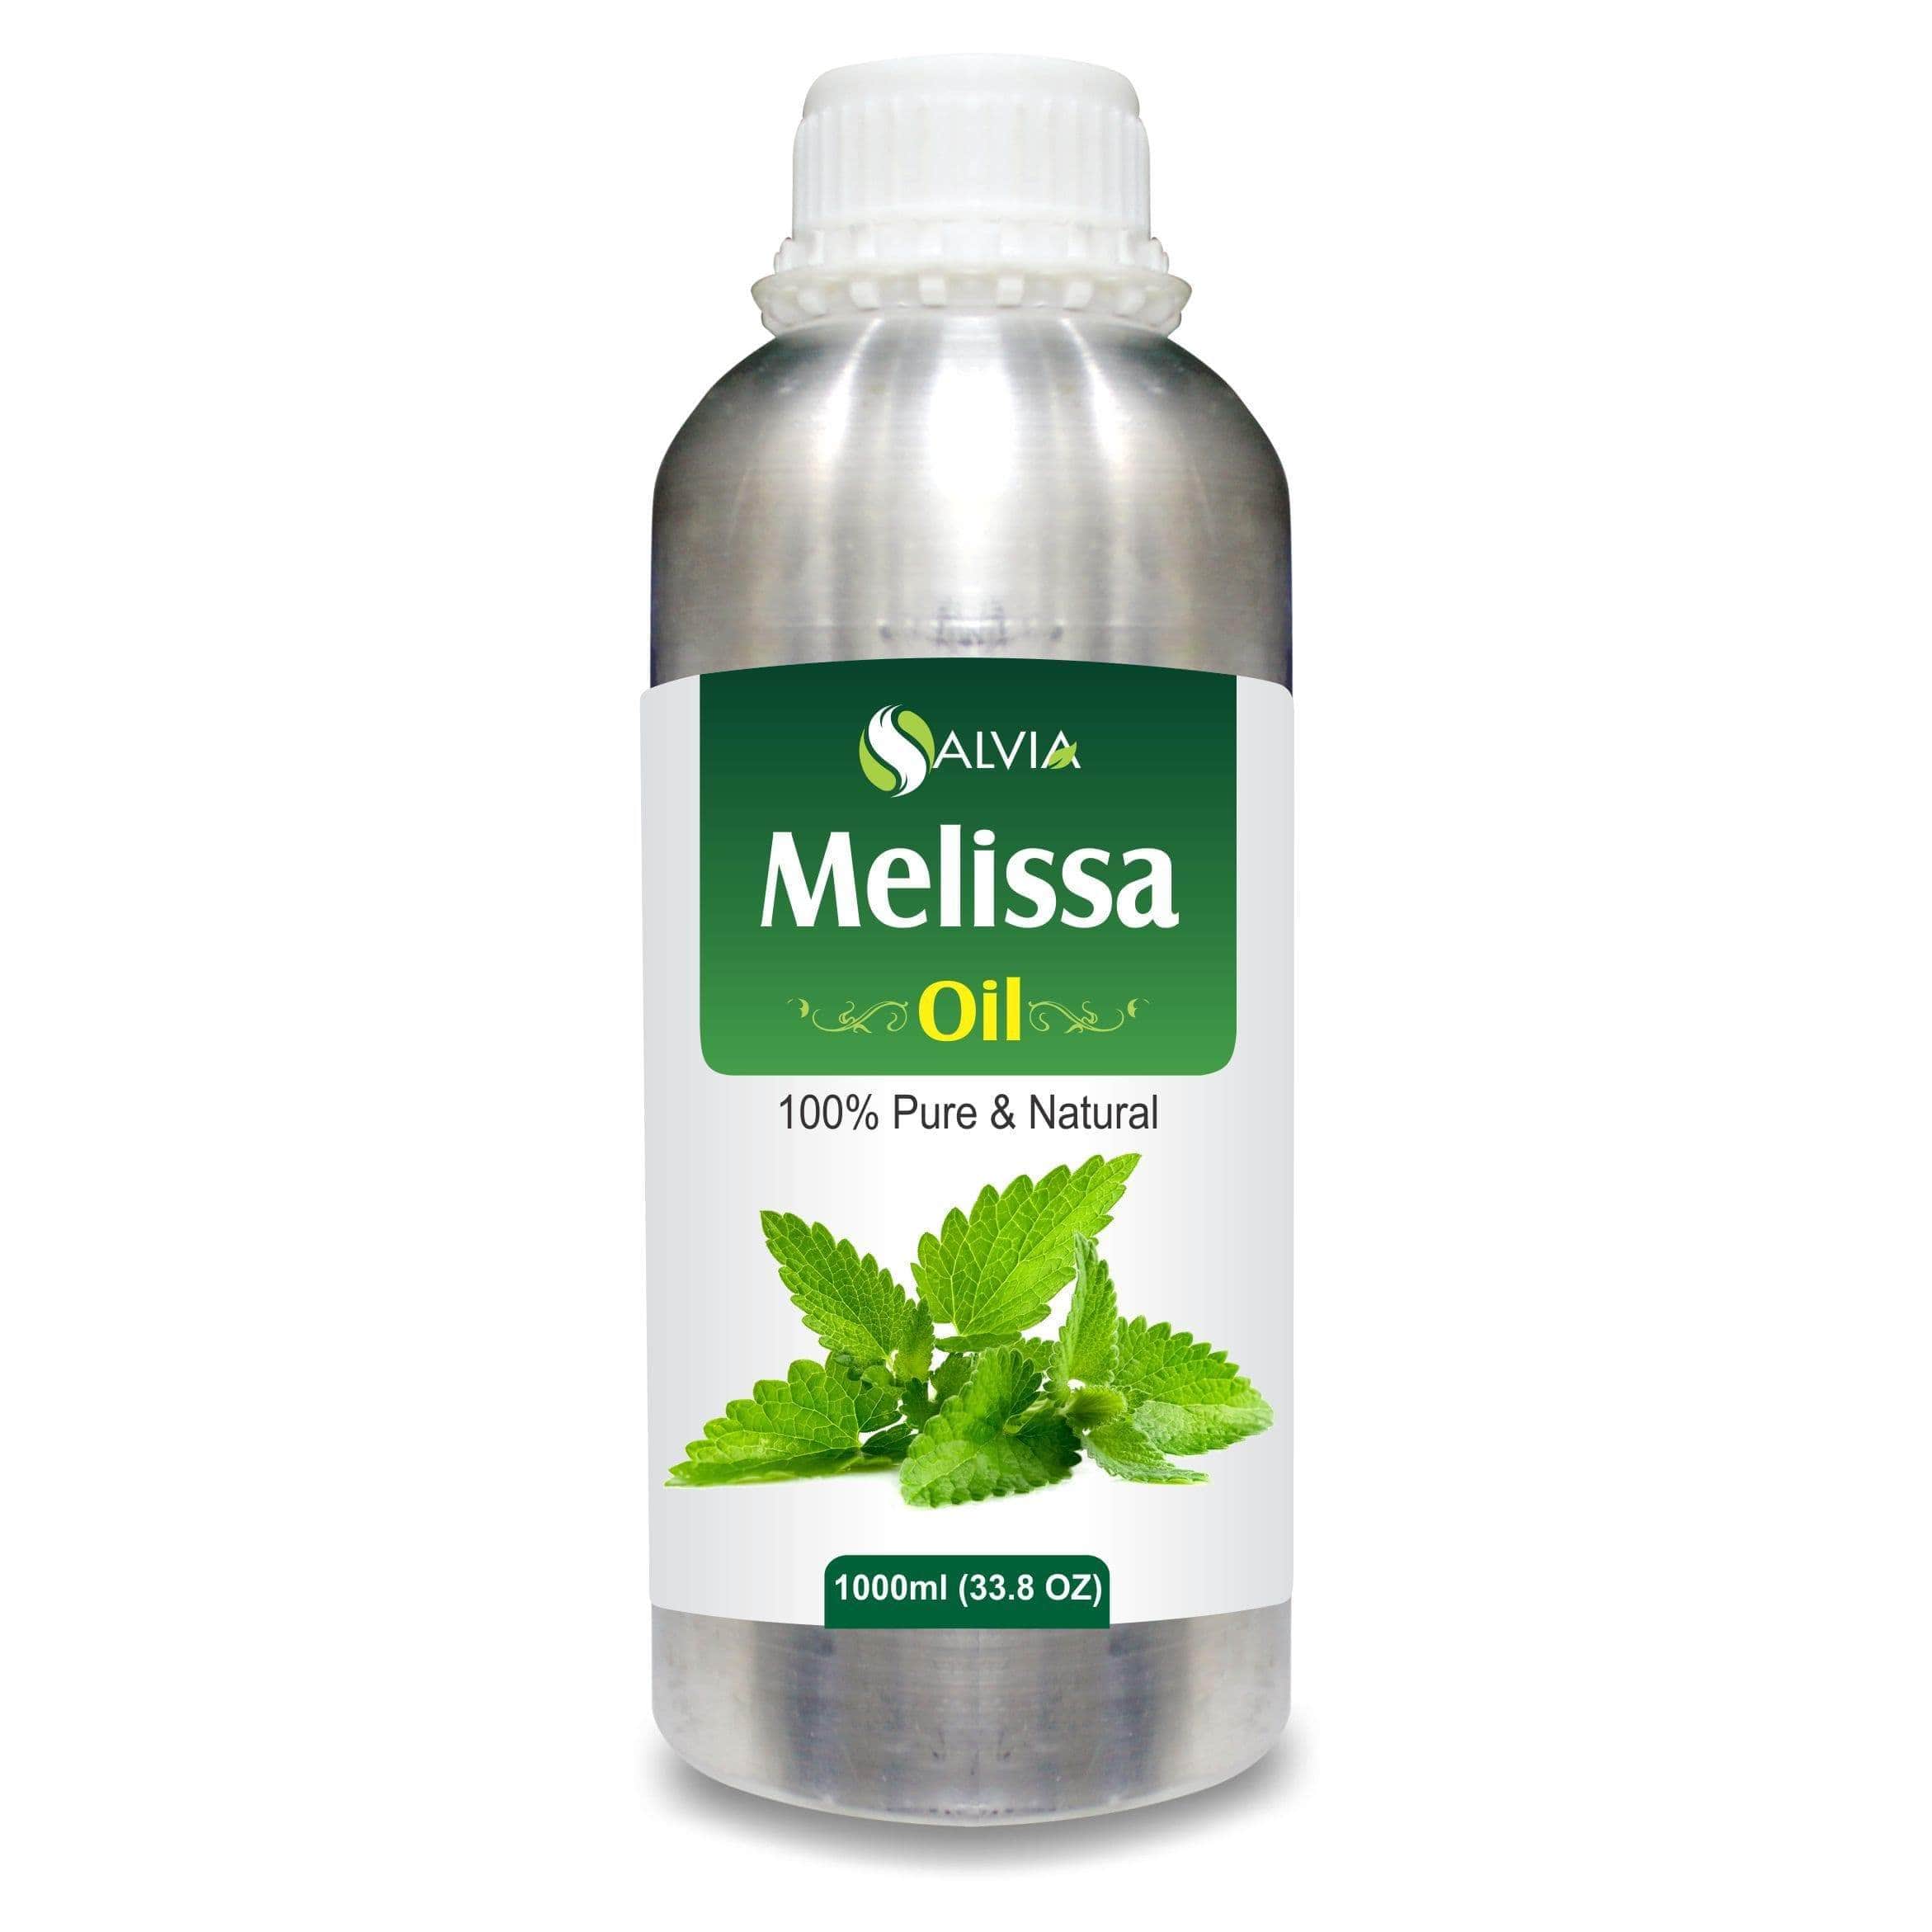 melissa oil benefits